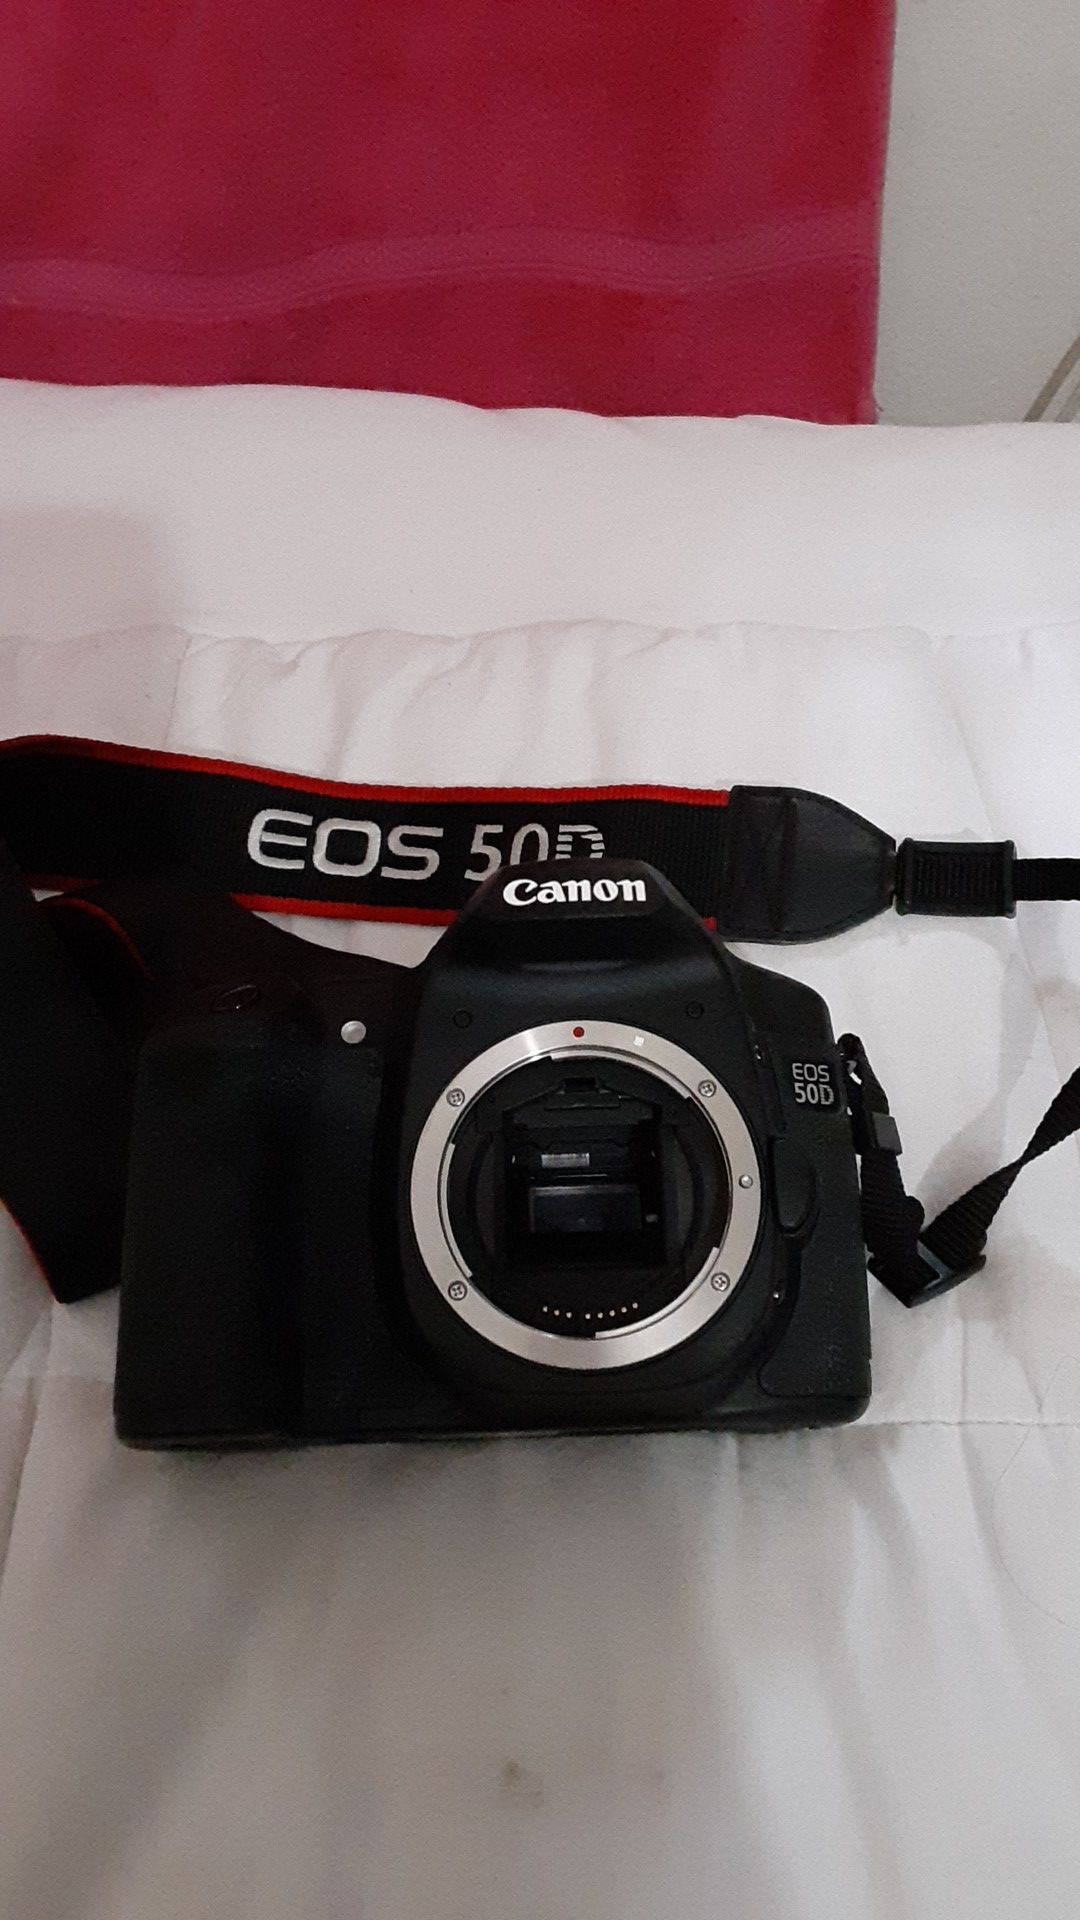 Canon Camera EOS 50D W/ Image Stabilizer Lens